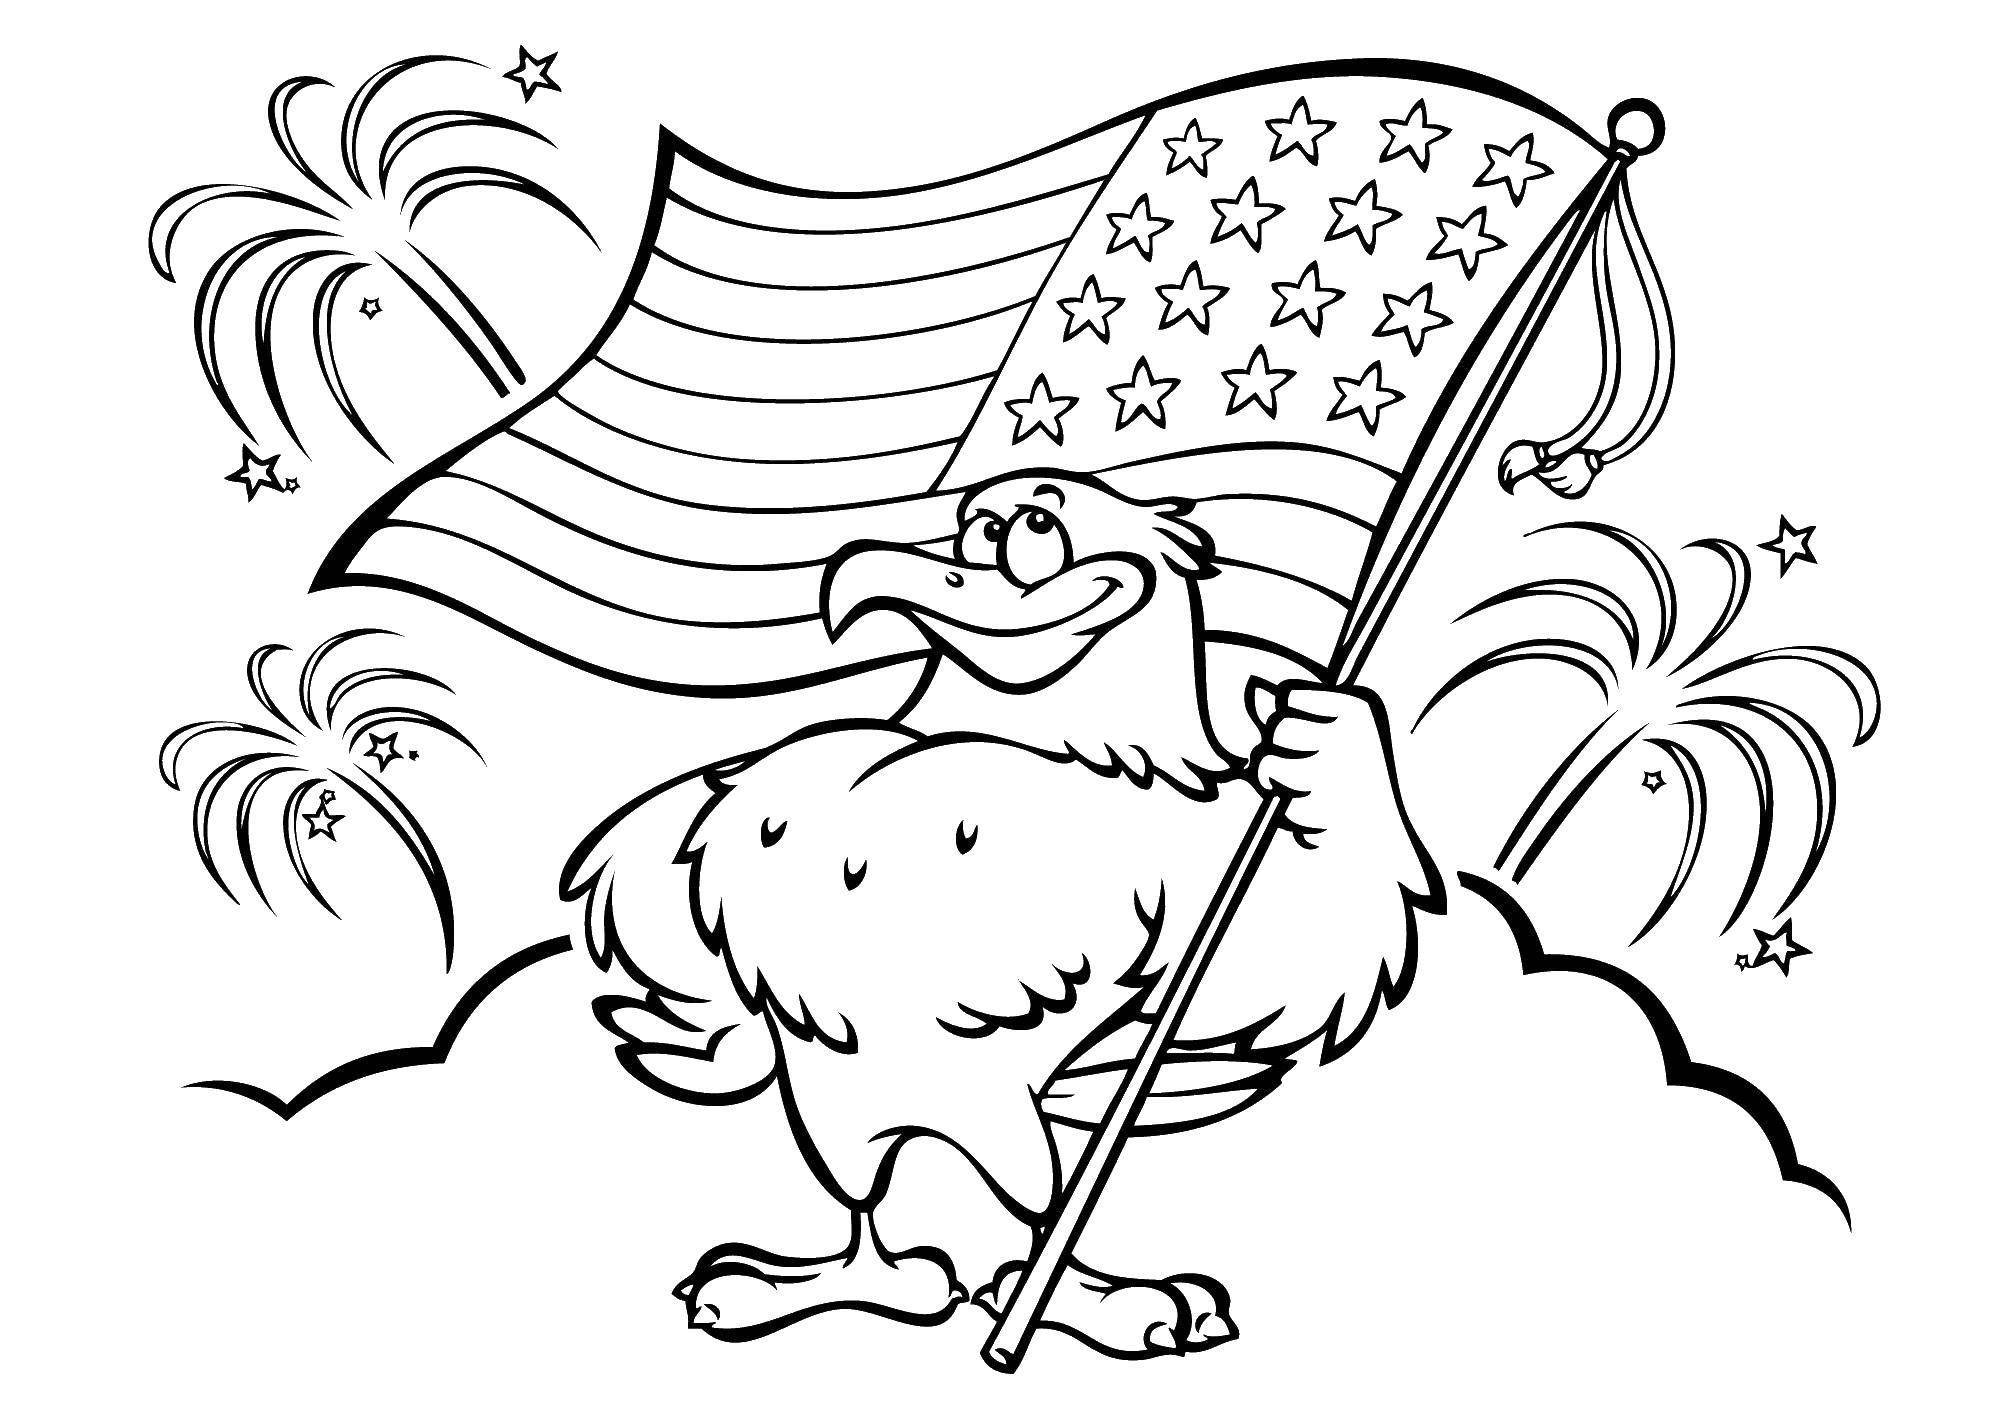 Coloring Eagle flag of America. Category USA . Tags:  USA, America, flag.